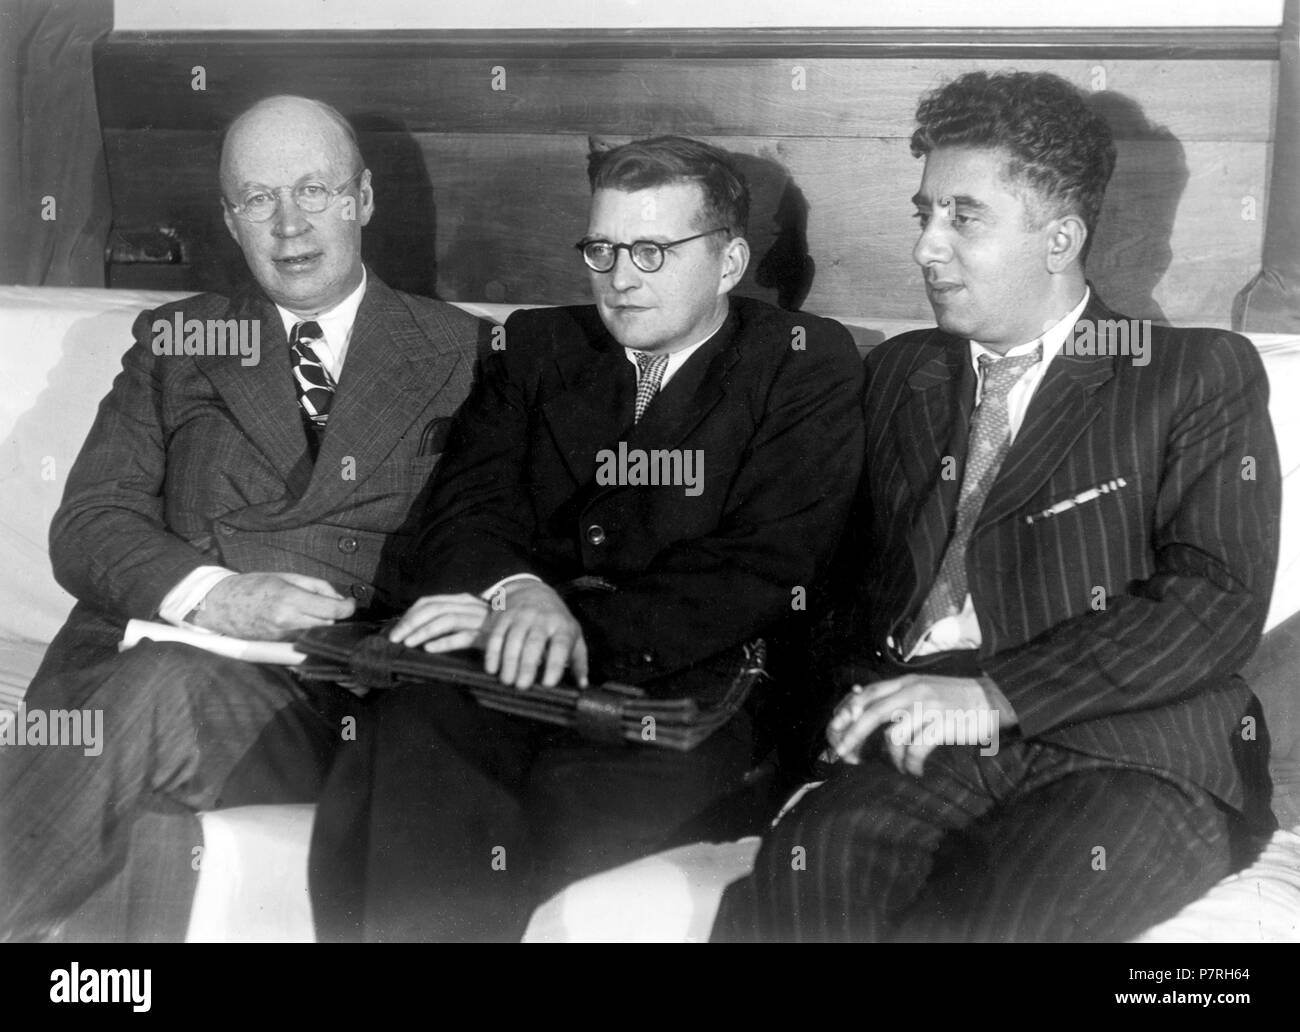 English: From left to right: Sergei Prokofiev, Dmitri Shostakovich and Aram Khachaturian. 1940 321 Prokofiev shostakovich khachaturian Stock Photo